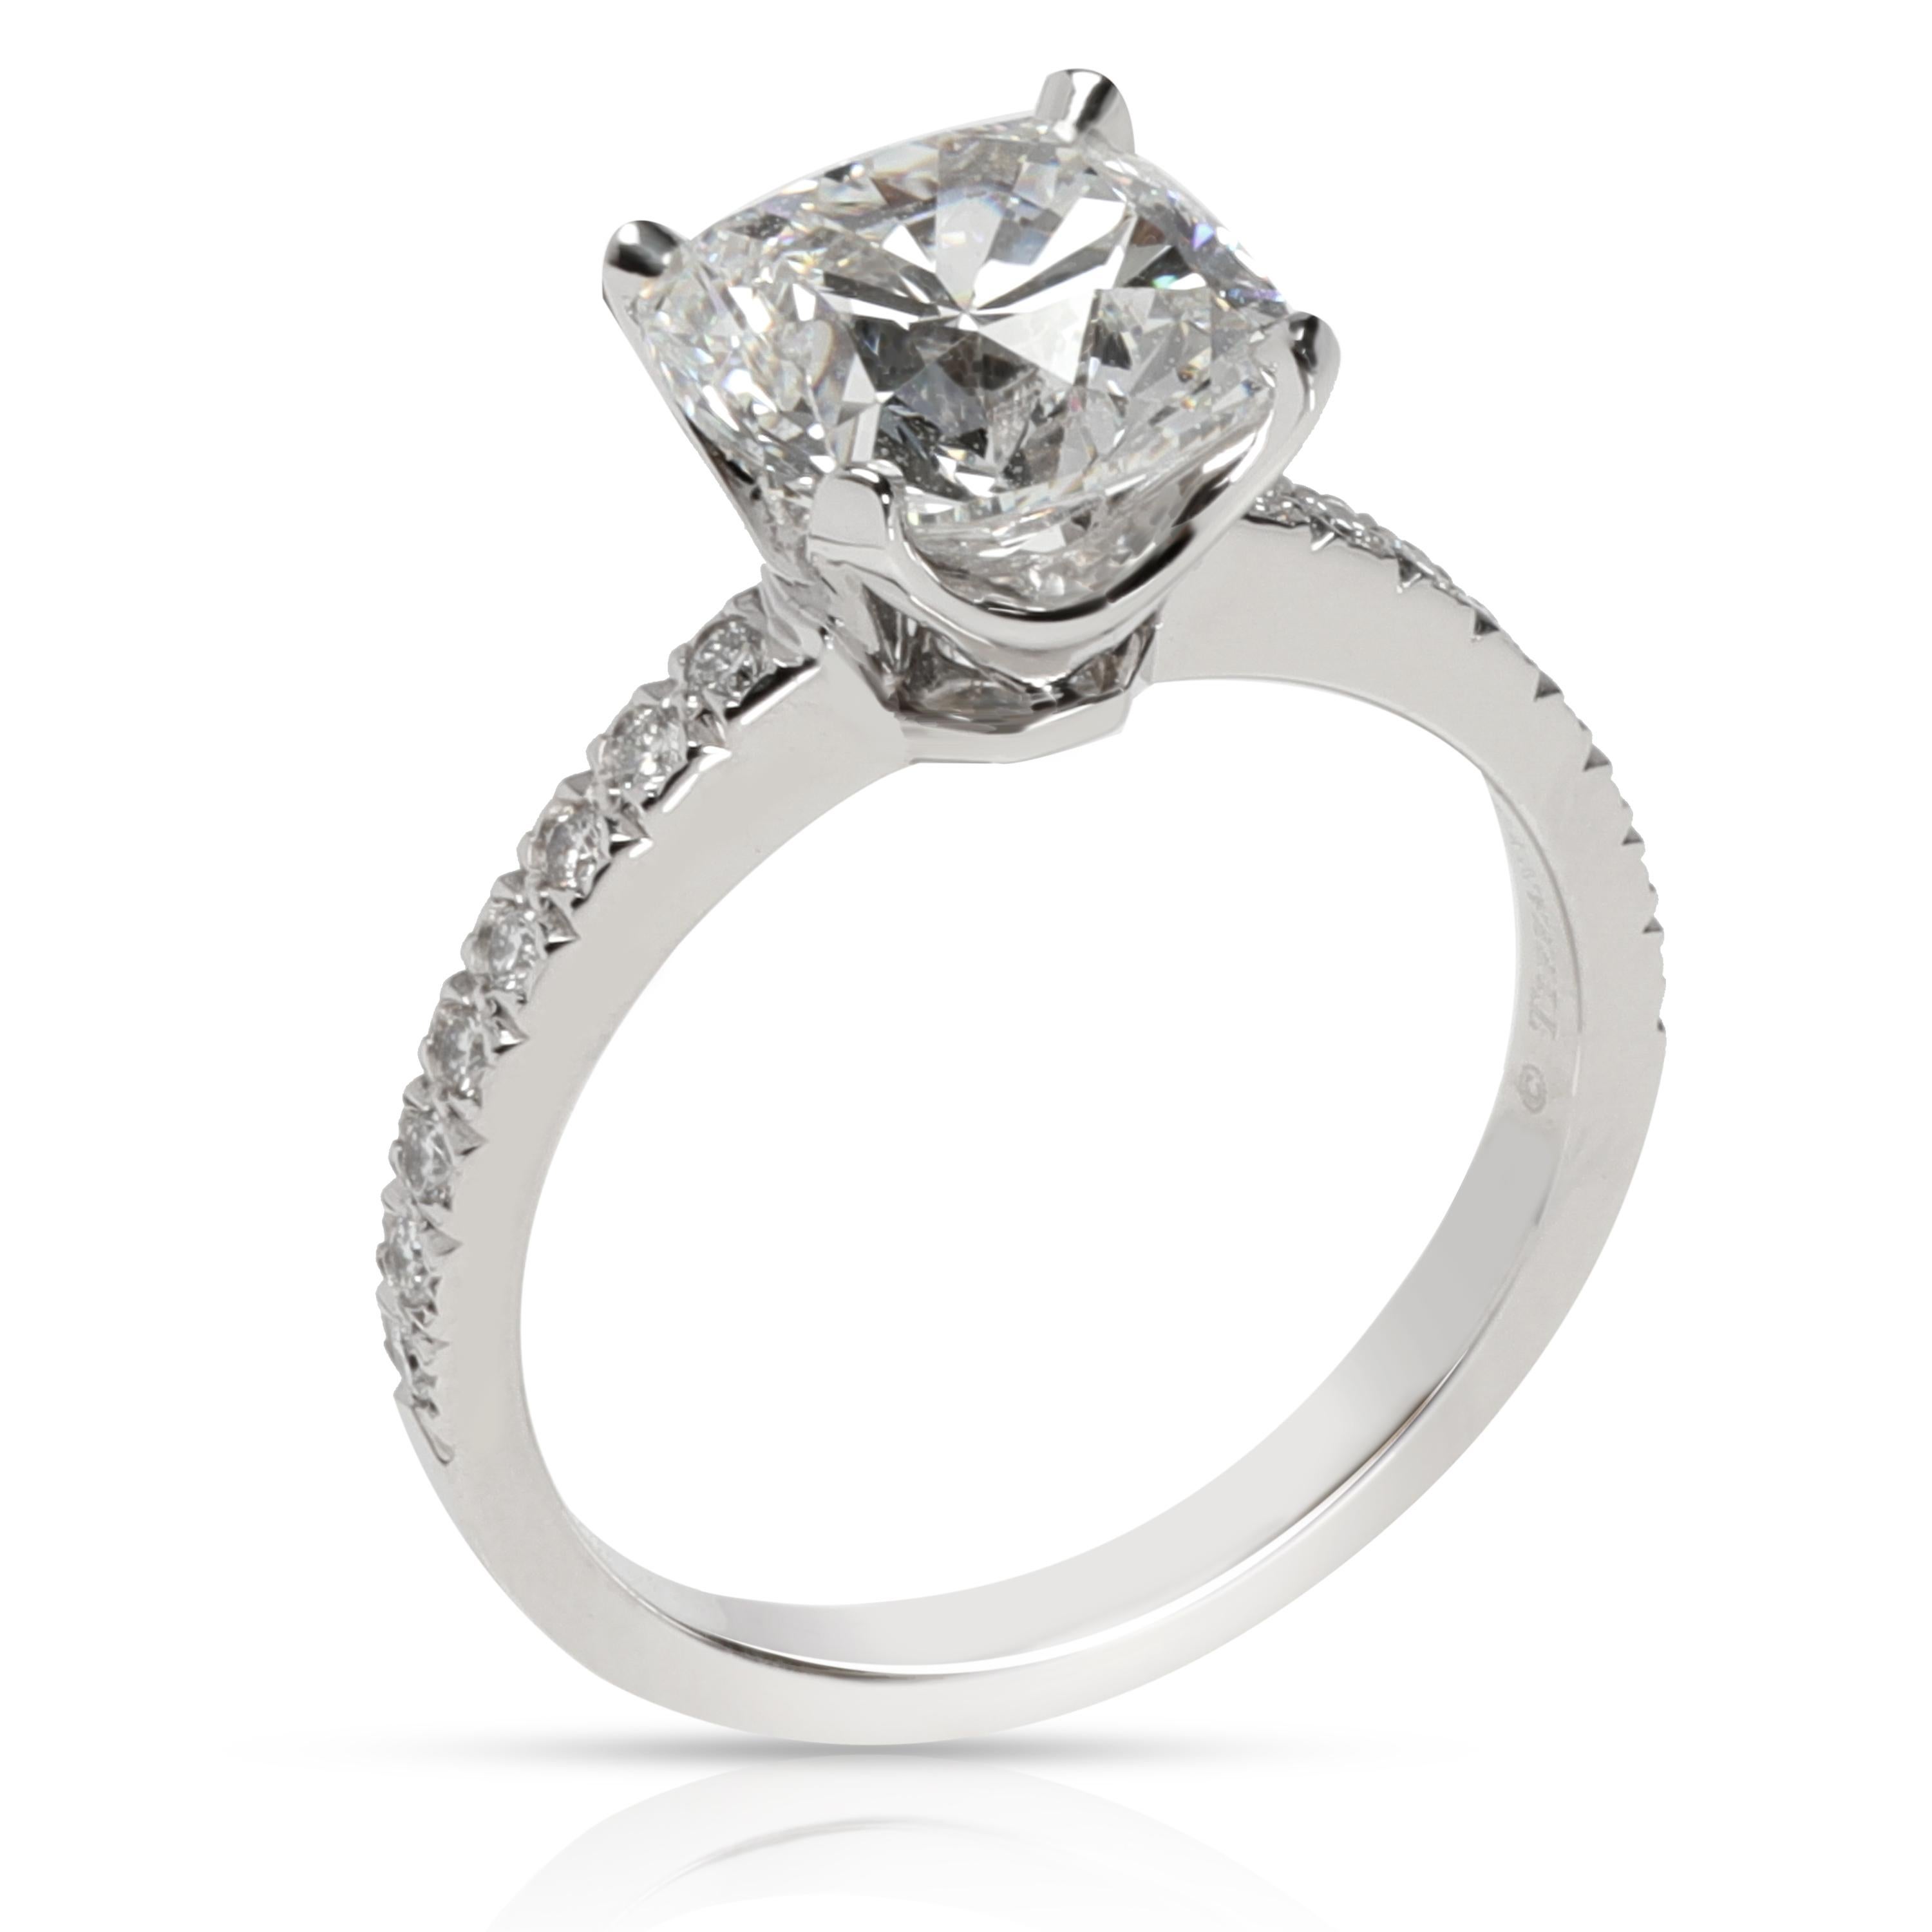 Cushion Cut Tiffany & Co. Novo Diamond Engagement Ring in Platinum E VVS1 2.67 Carat